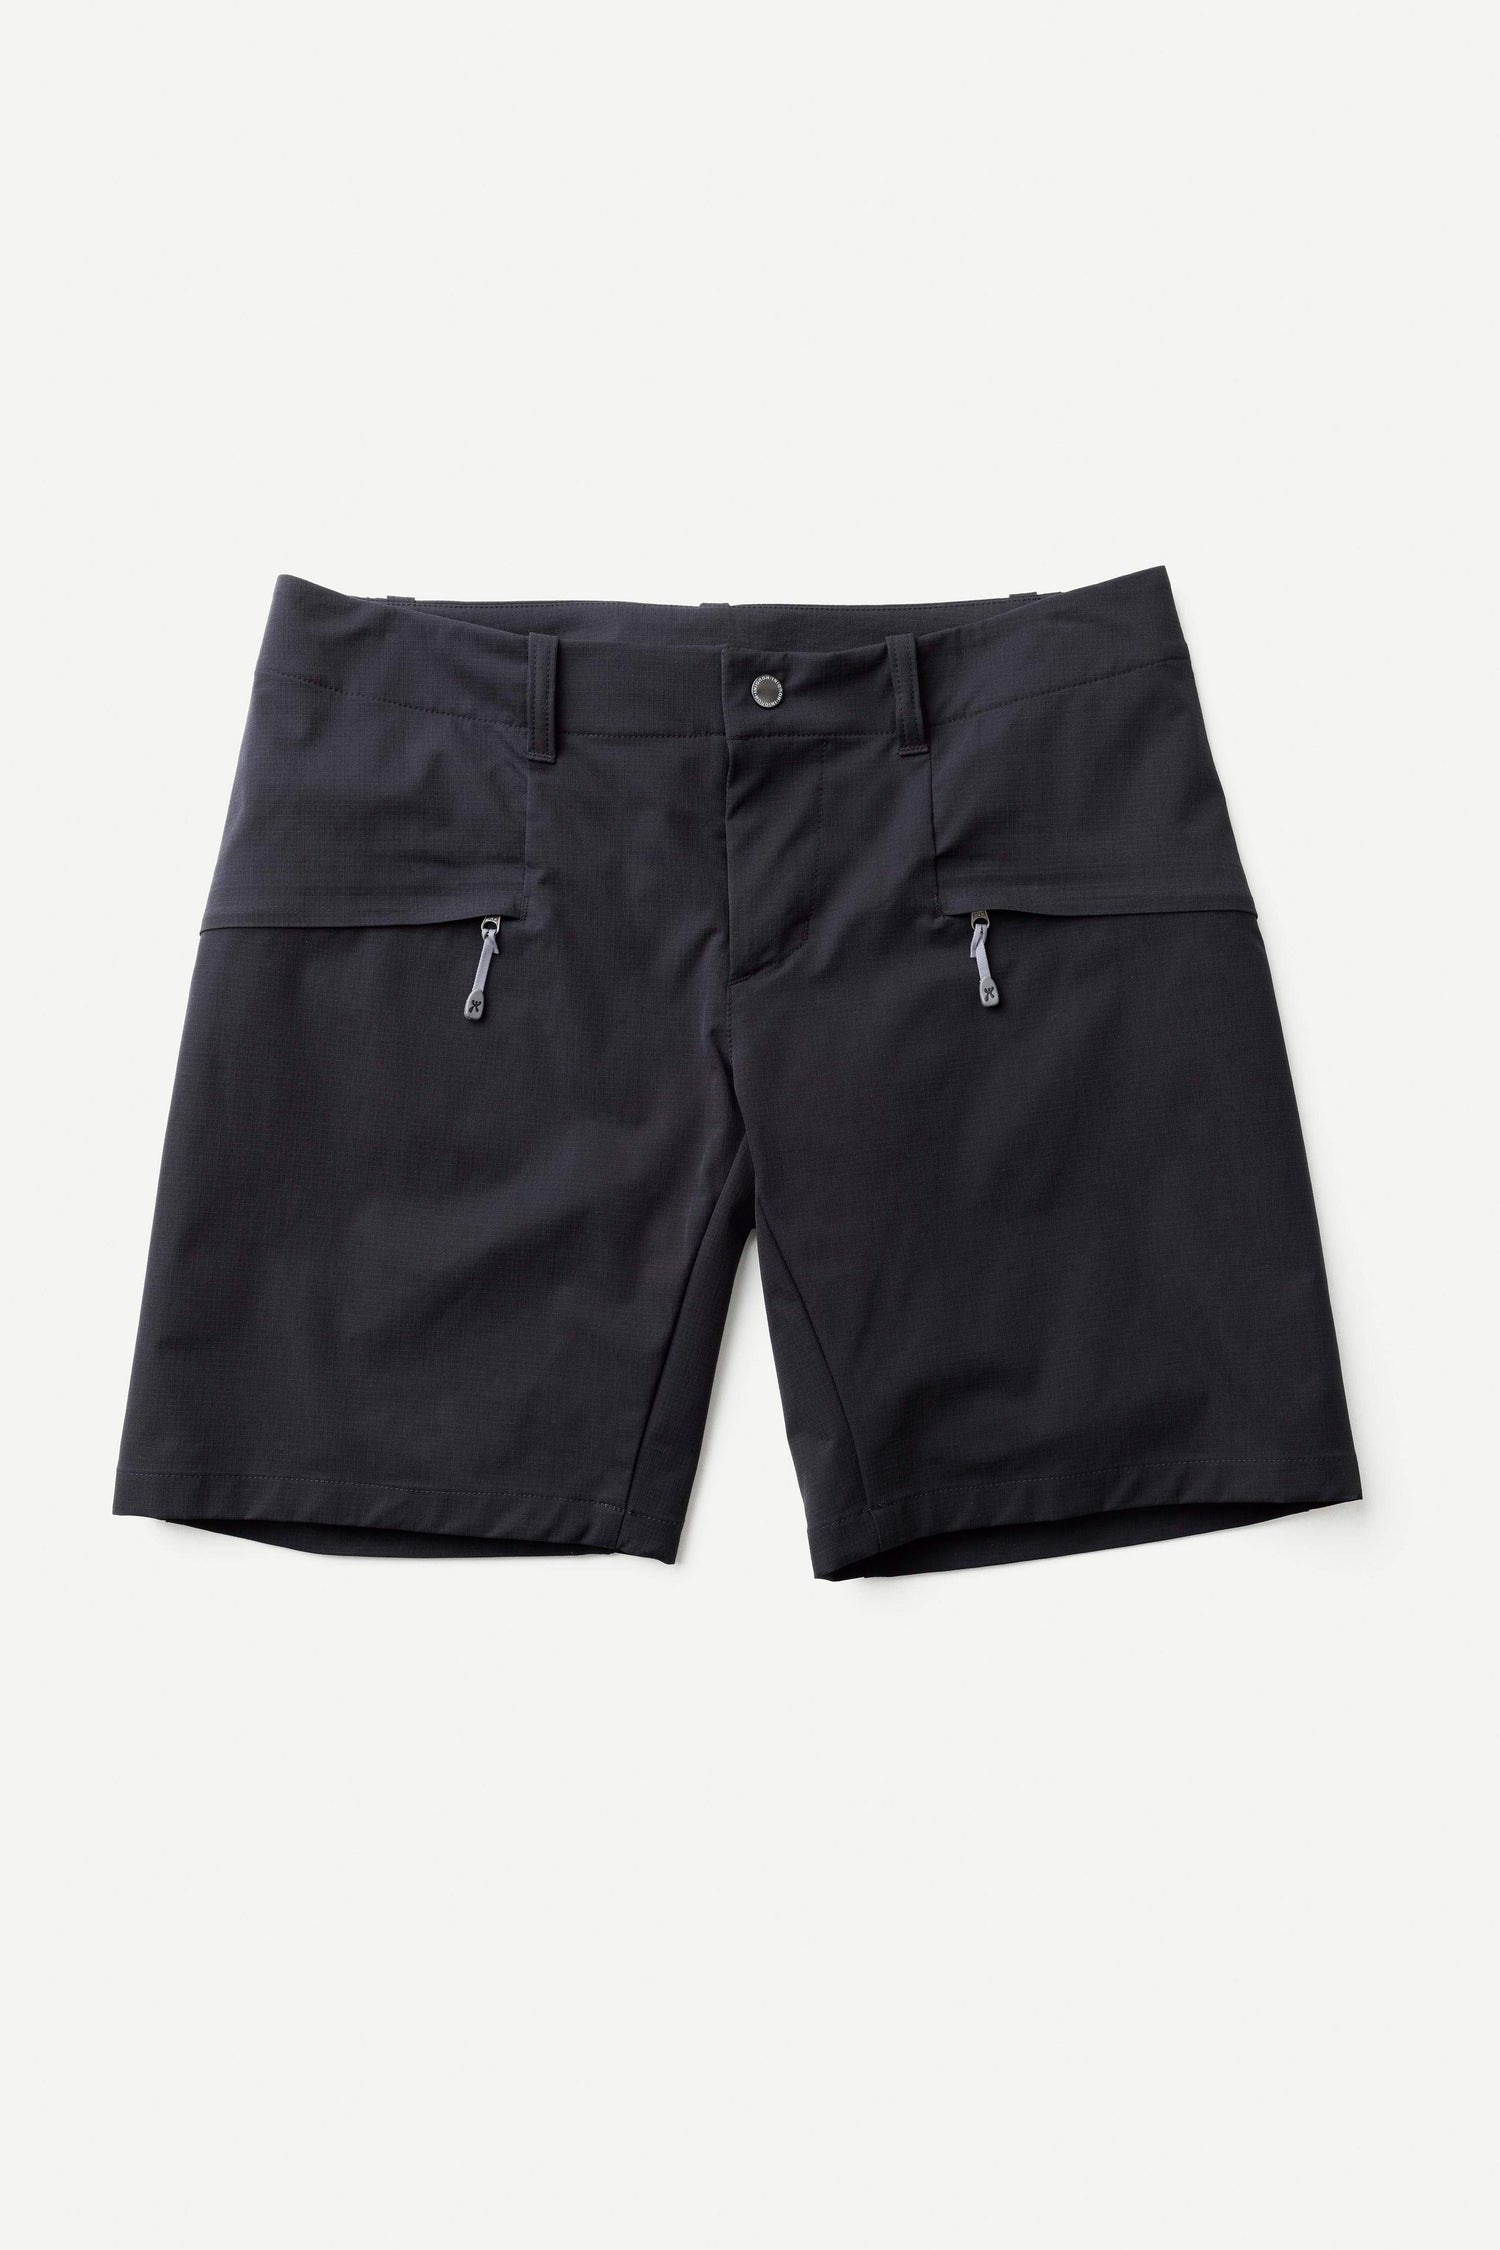 Houdini W's Daybreak Shorts - Recycled Polyester True Black Pants